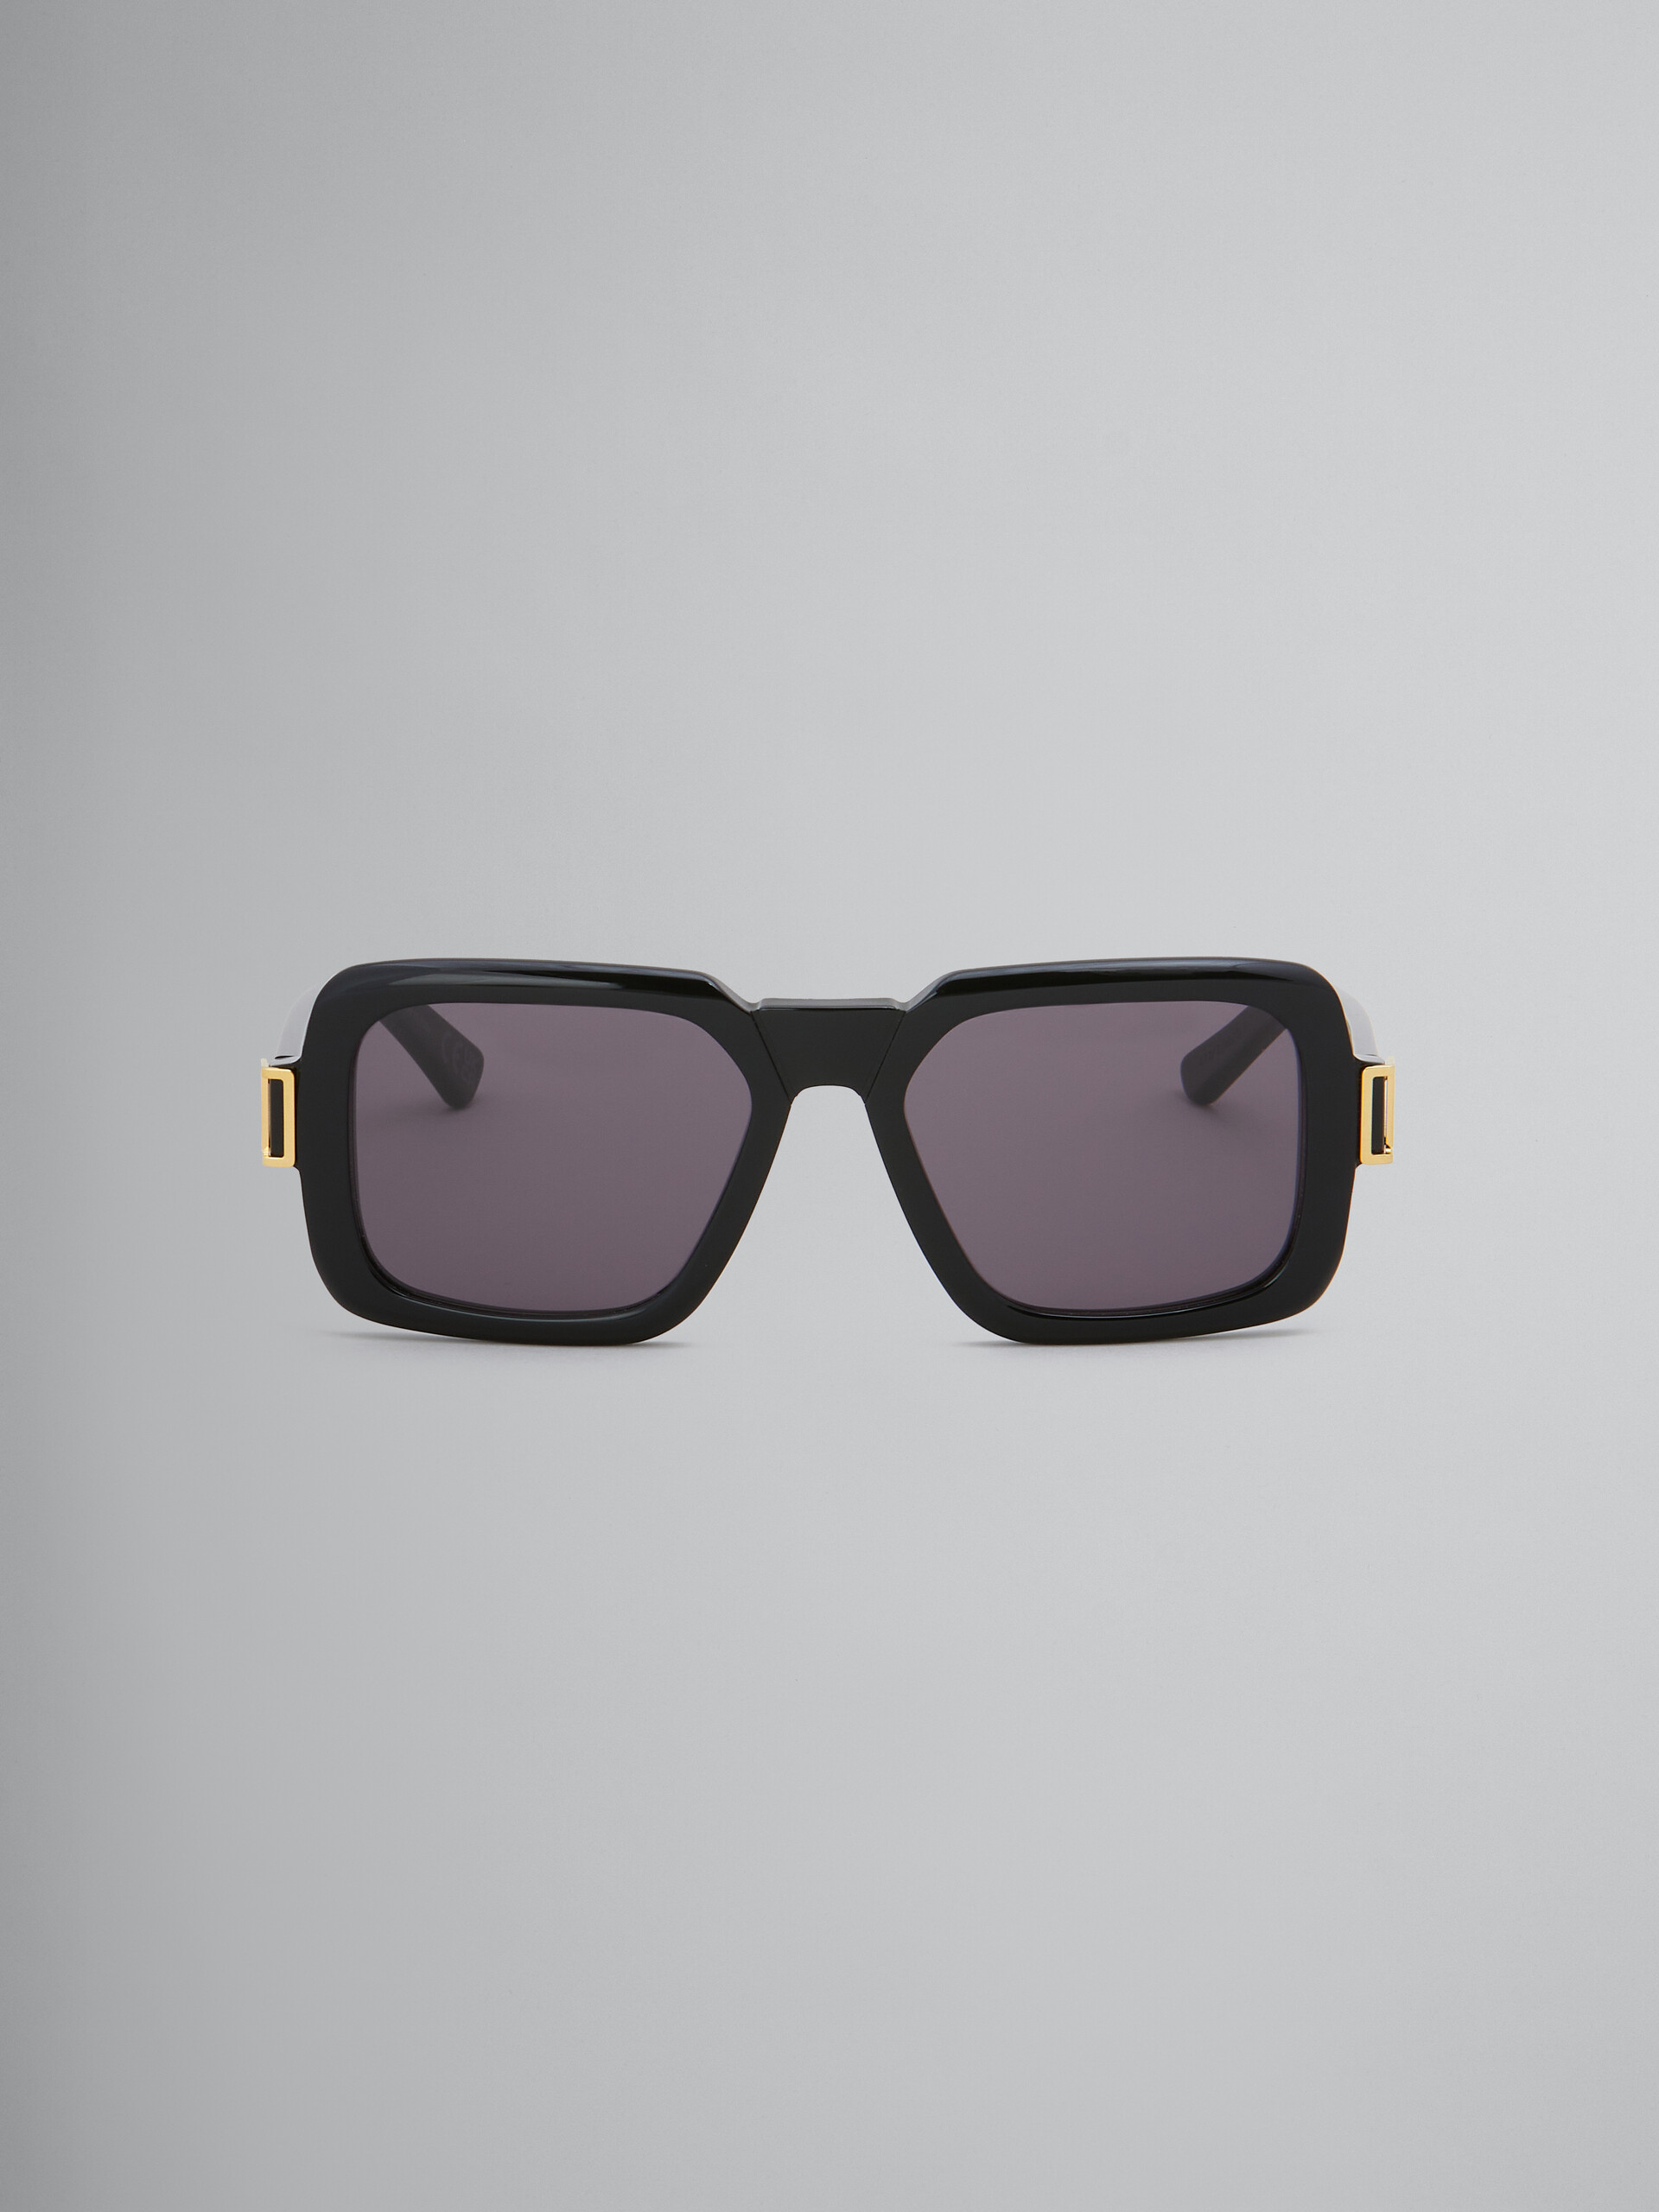 Louis Vuitton 1.1 Millionaires Square Sunglasses Multicolored Acetate & Metal. Size W